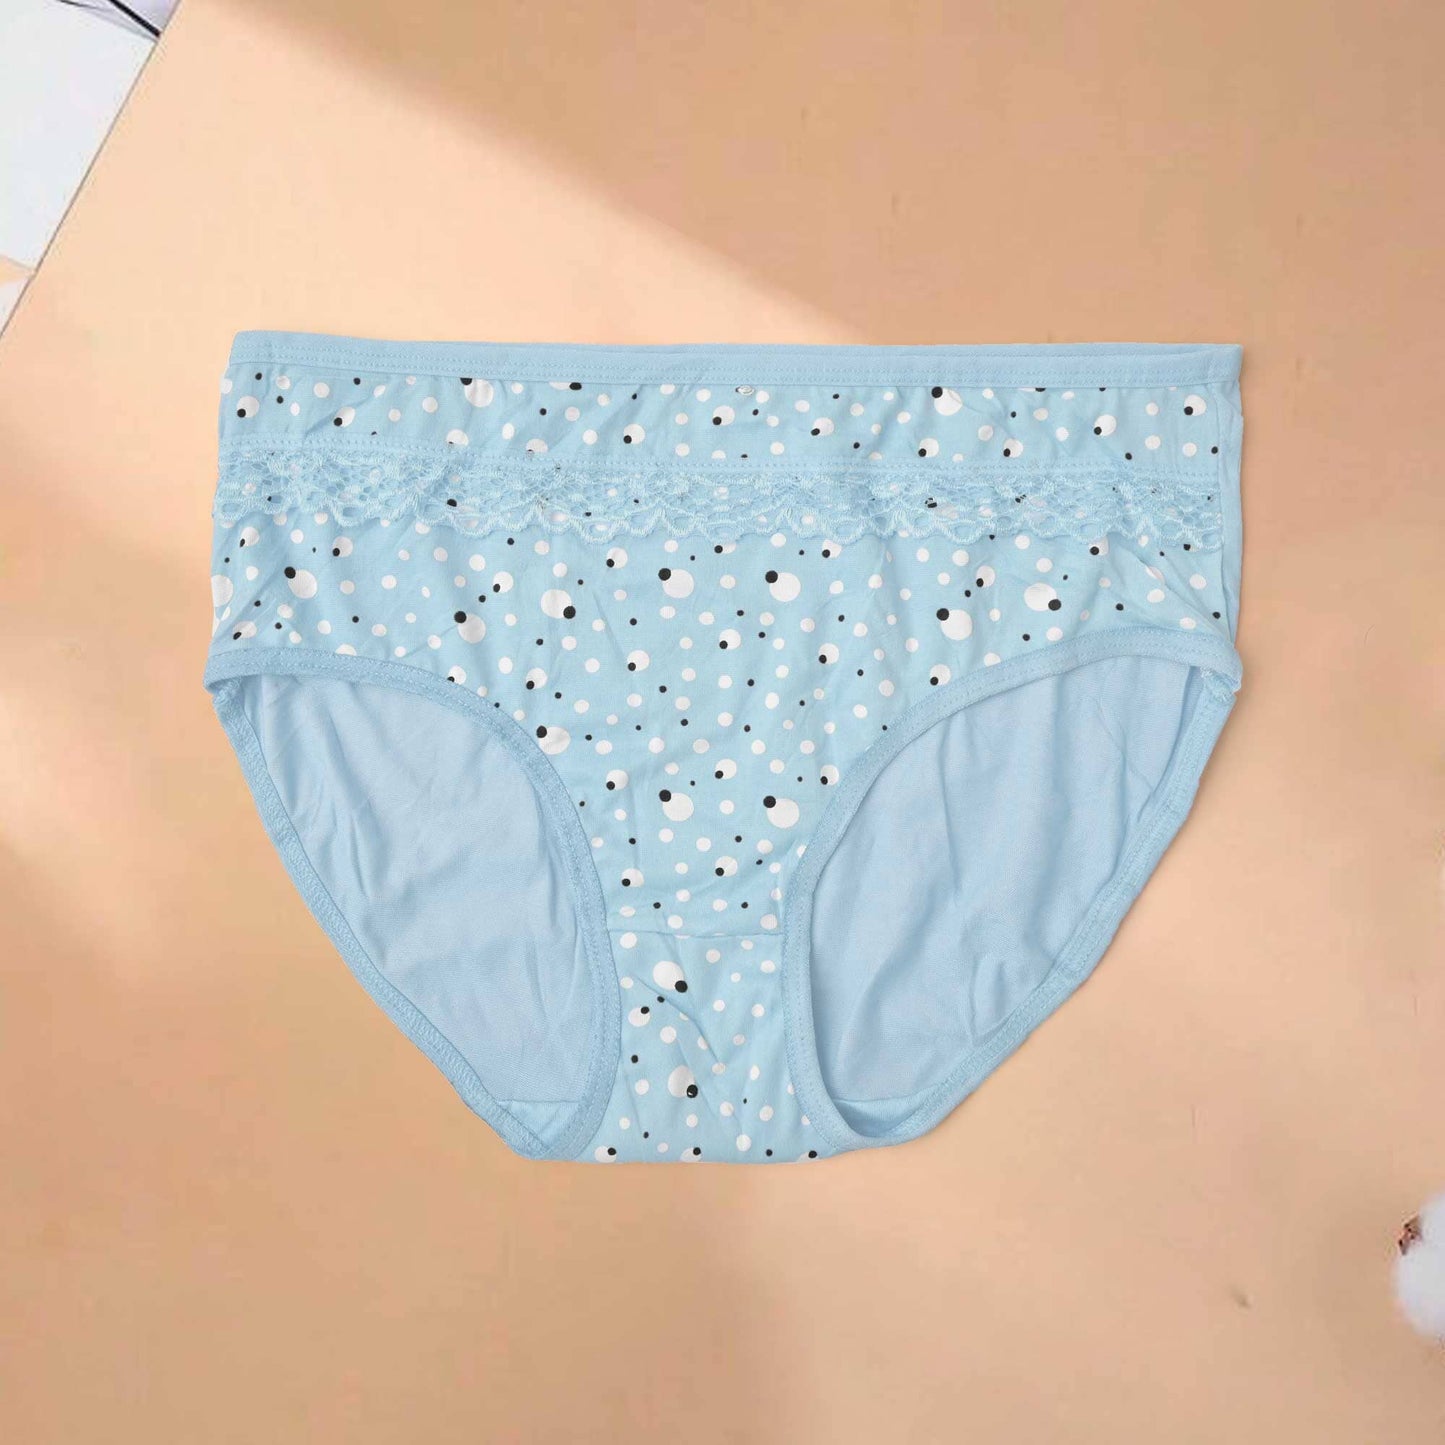 Yinidanya Women's Lace Design Polka Dots Printed Underwear Women's Lingerie RAM Sky 28-34 